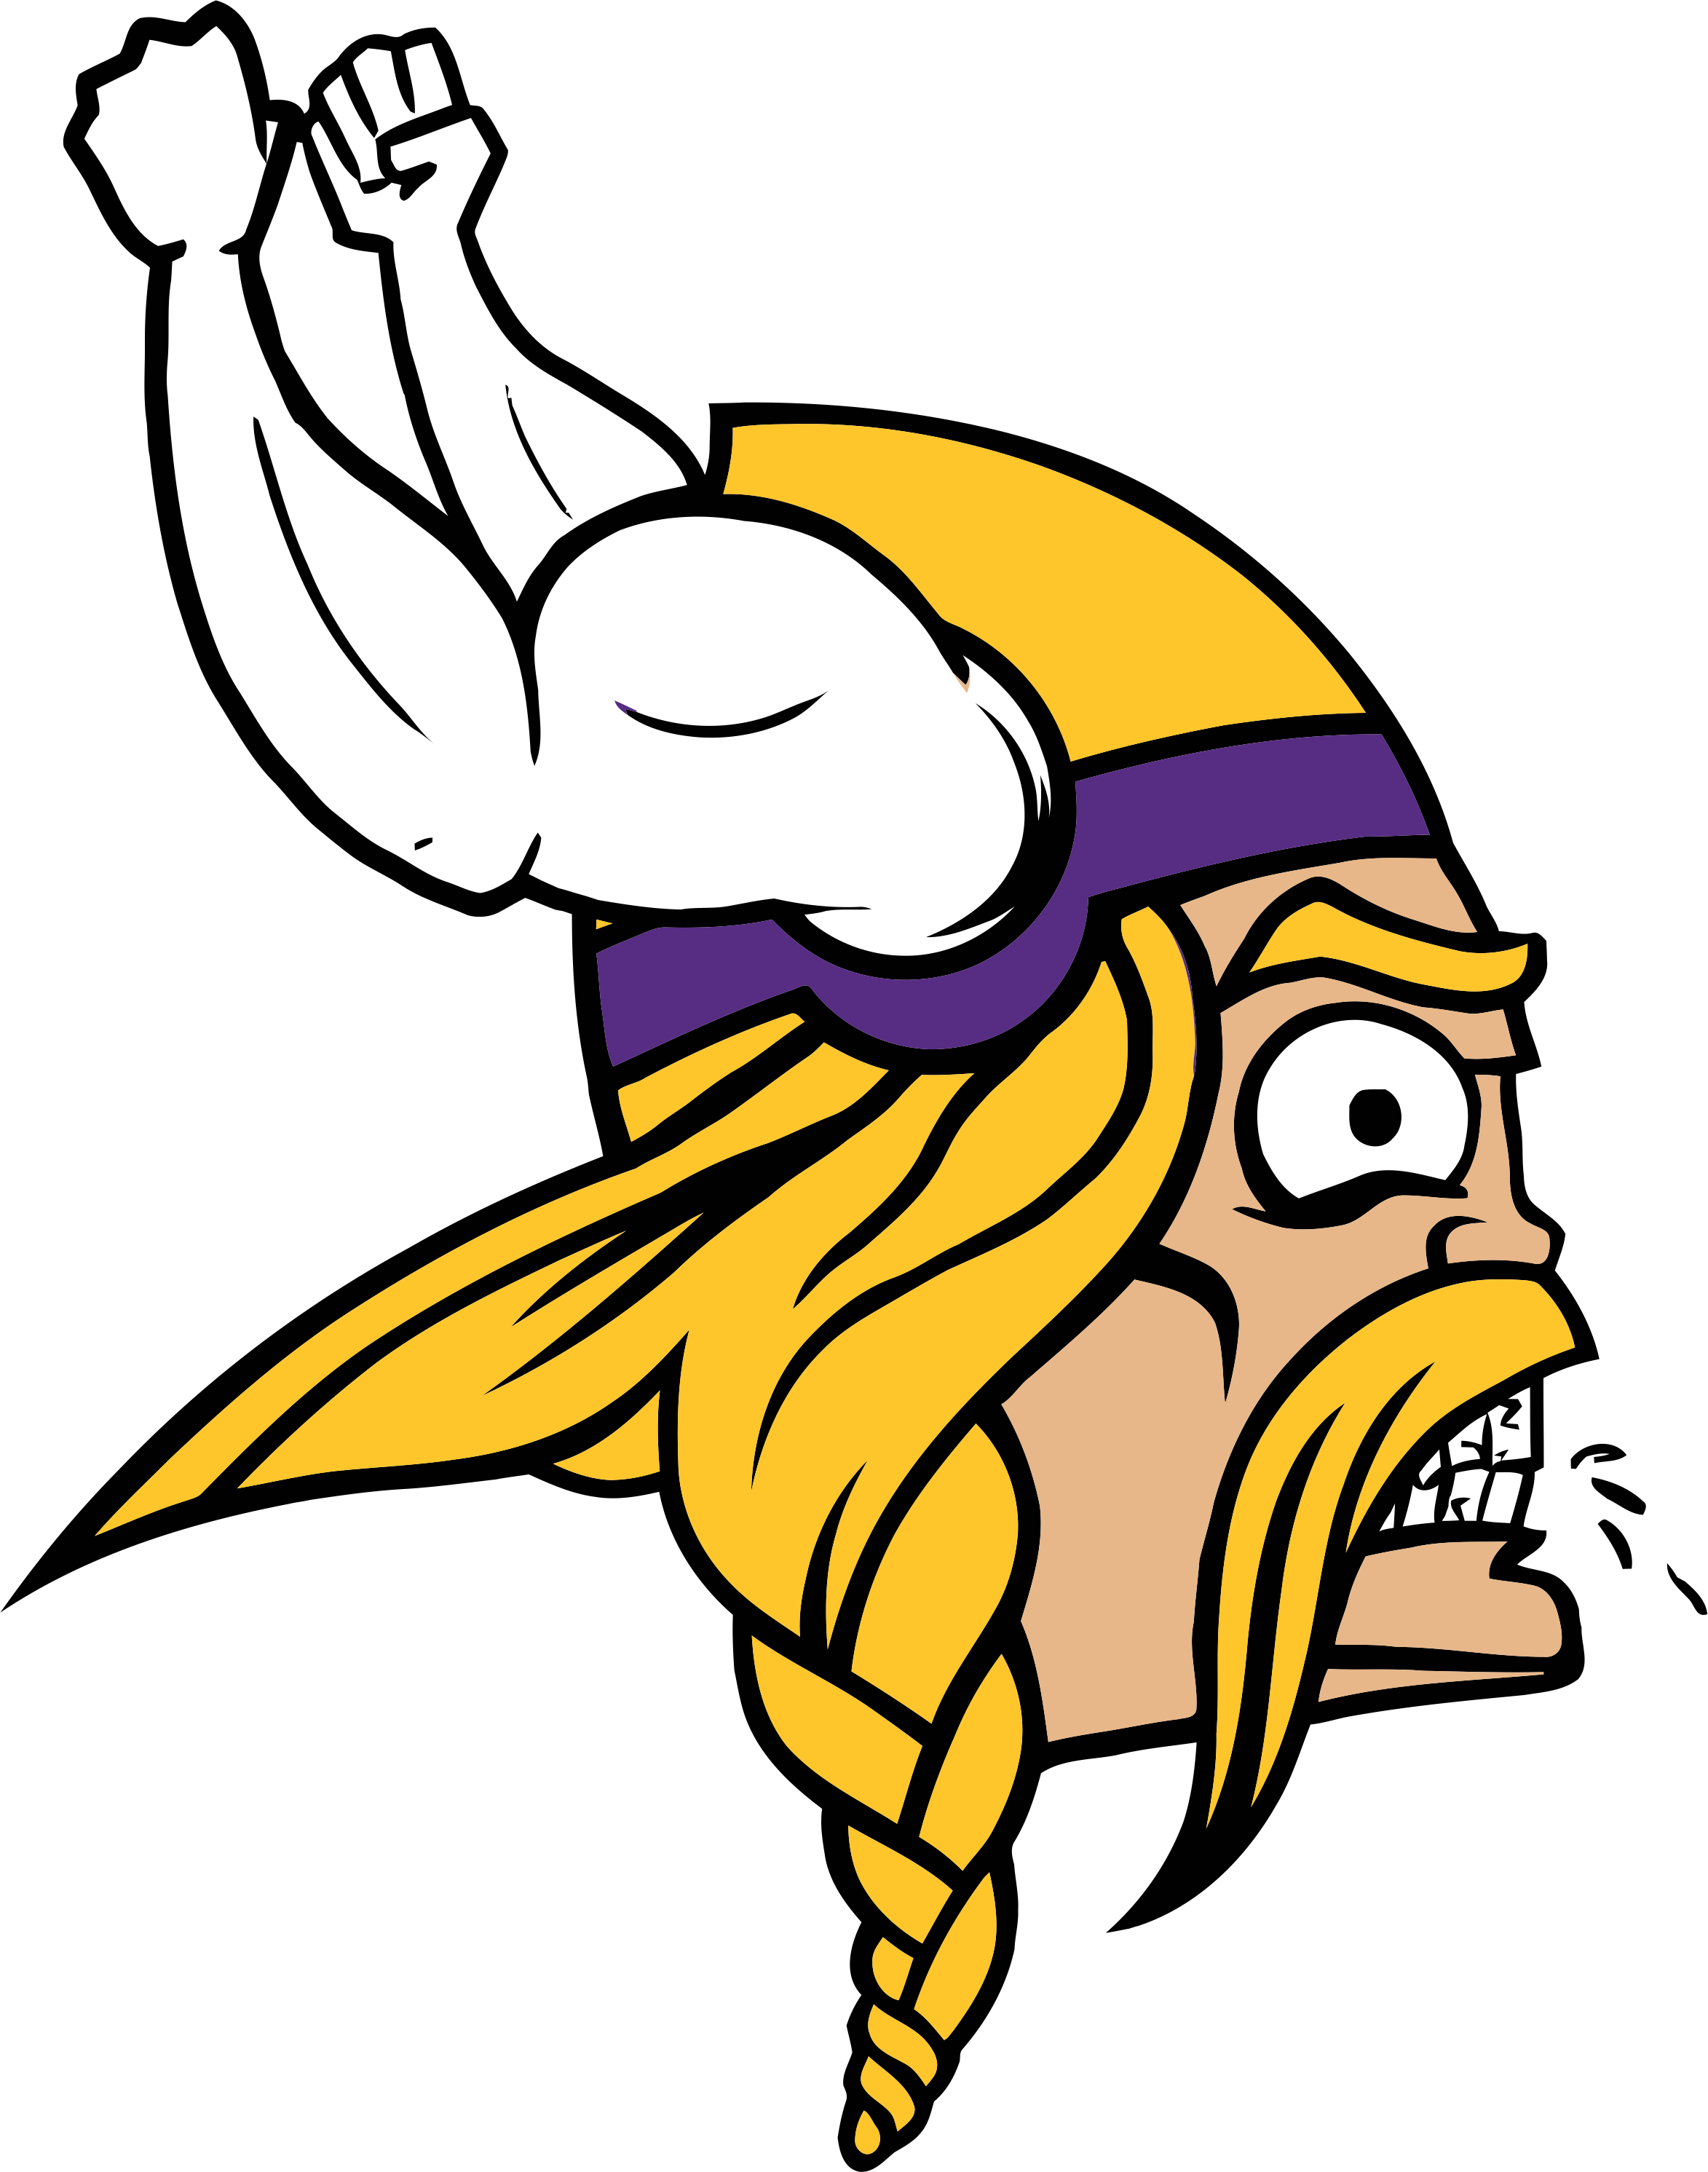 Minnesota Vikings Steroids Logo fabric transfer